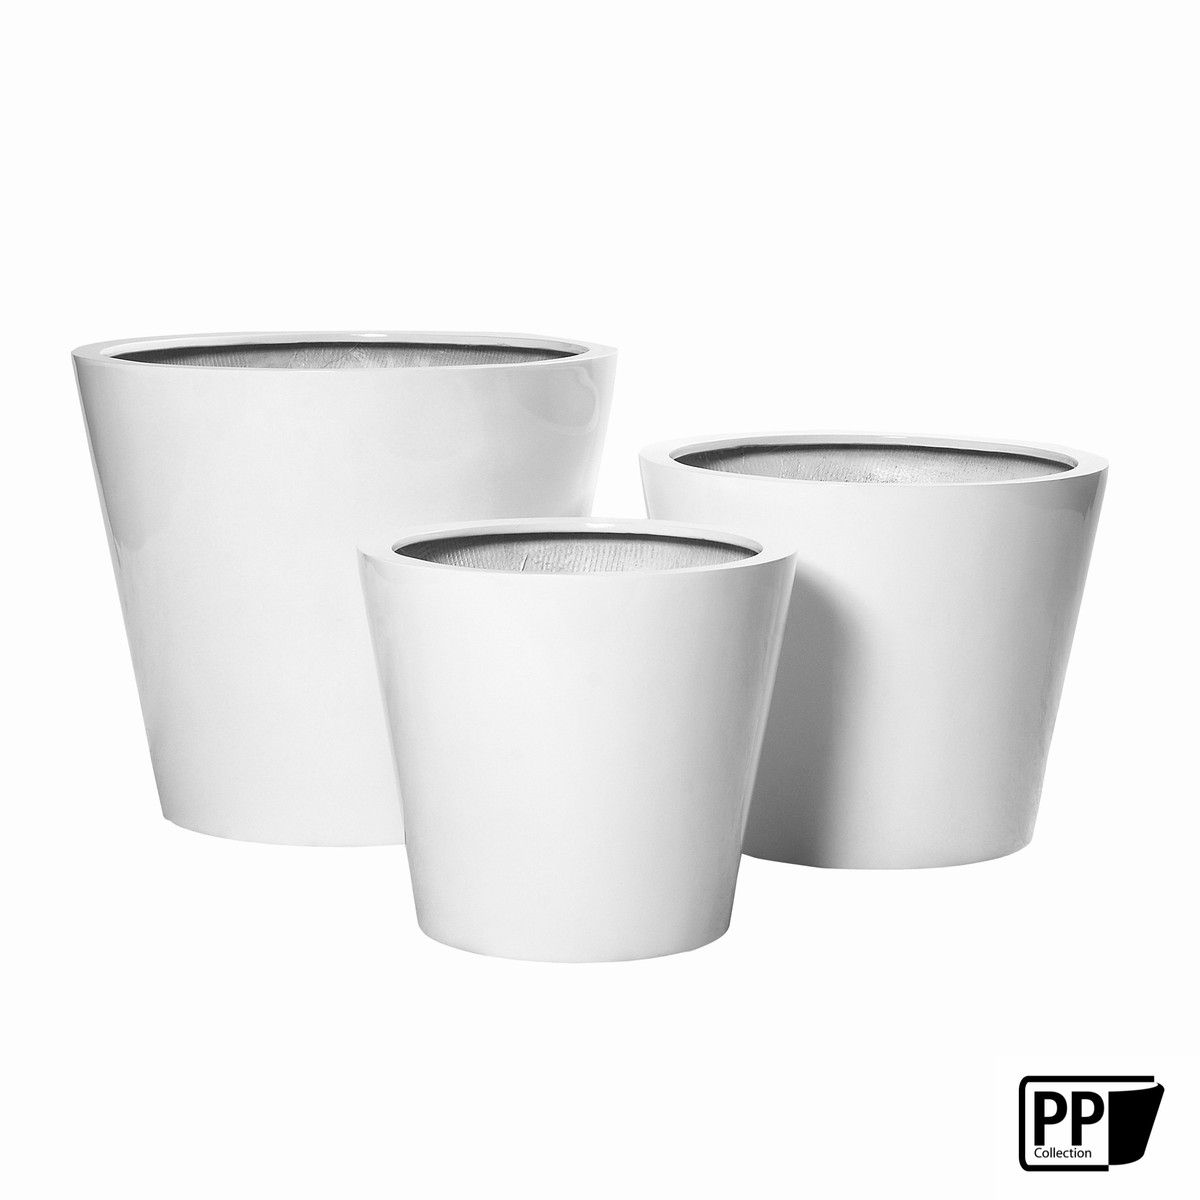 Potterypot
Potterypot
Pottery Pots  Bucket, Glossy White (E1004) Blanc Diam58x50cm